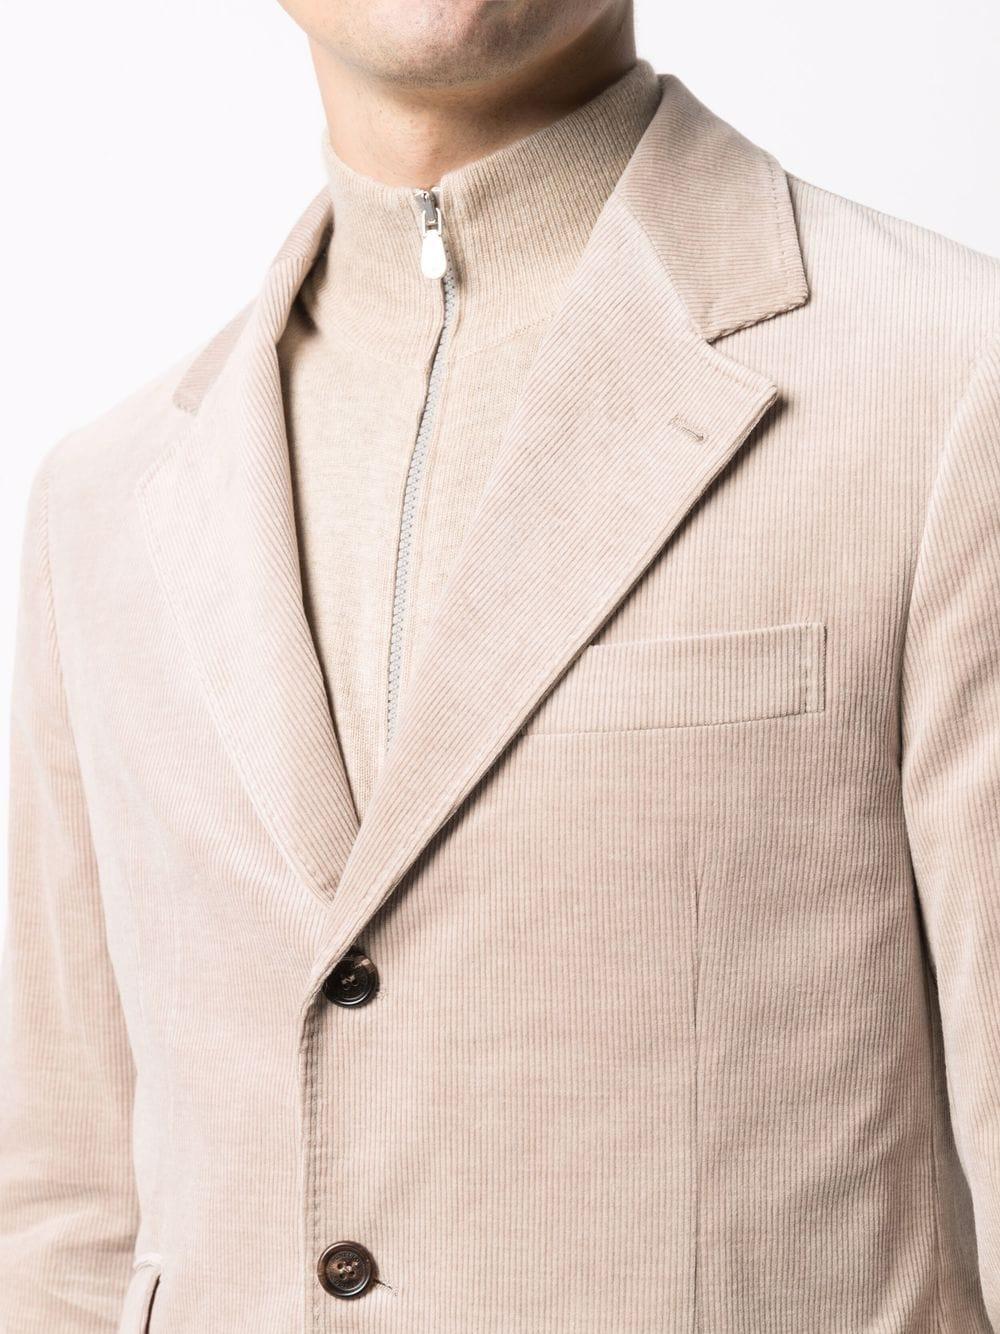 Brunello Cucinelli Cotton Jackets Brown for Men - Save 73% | Lyst